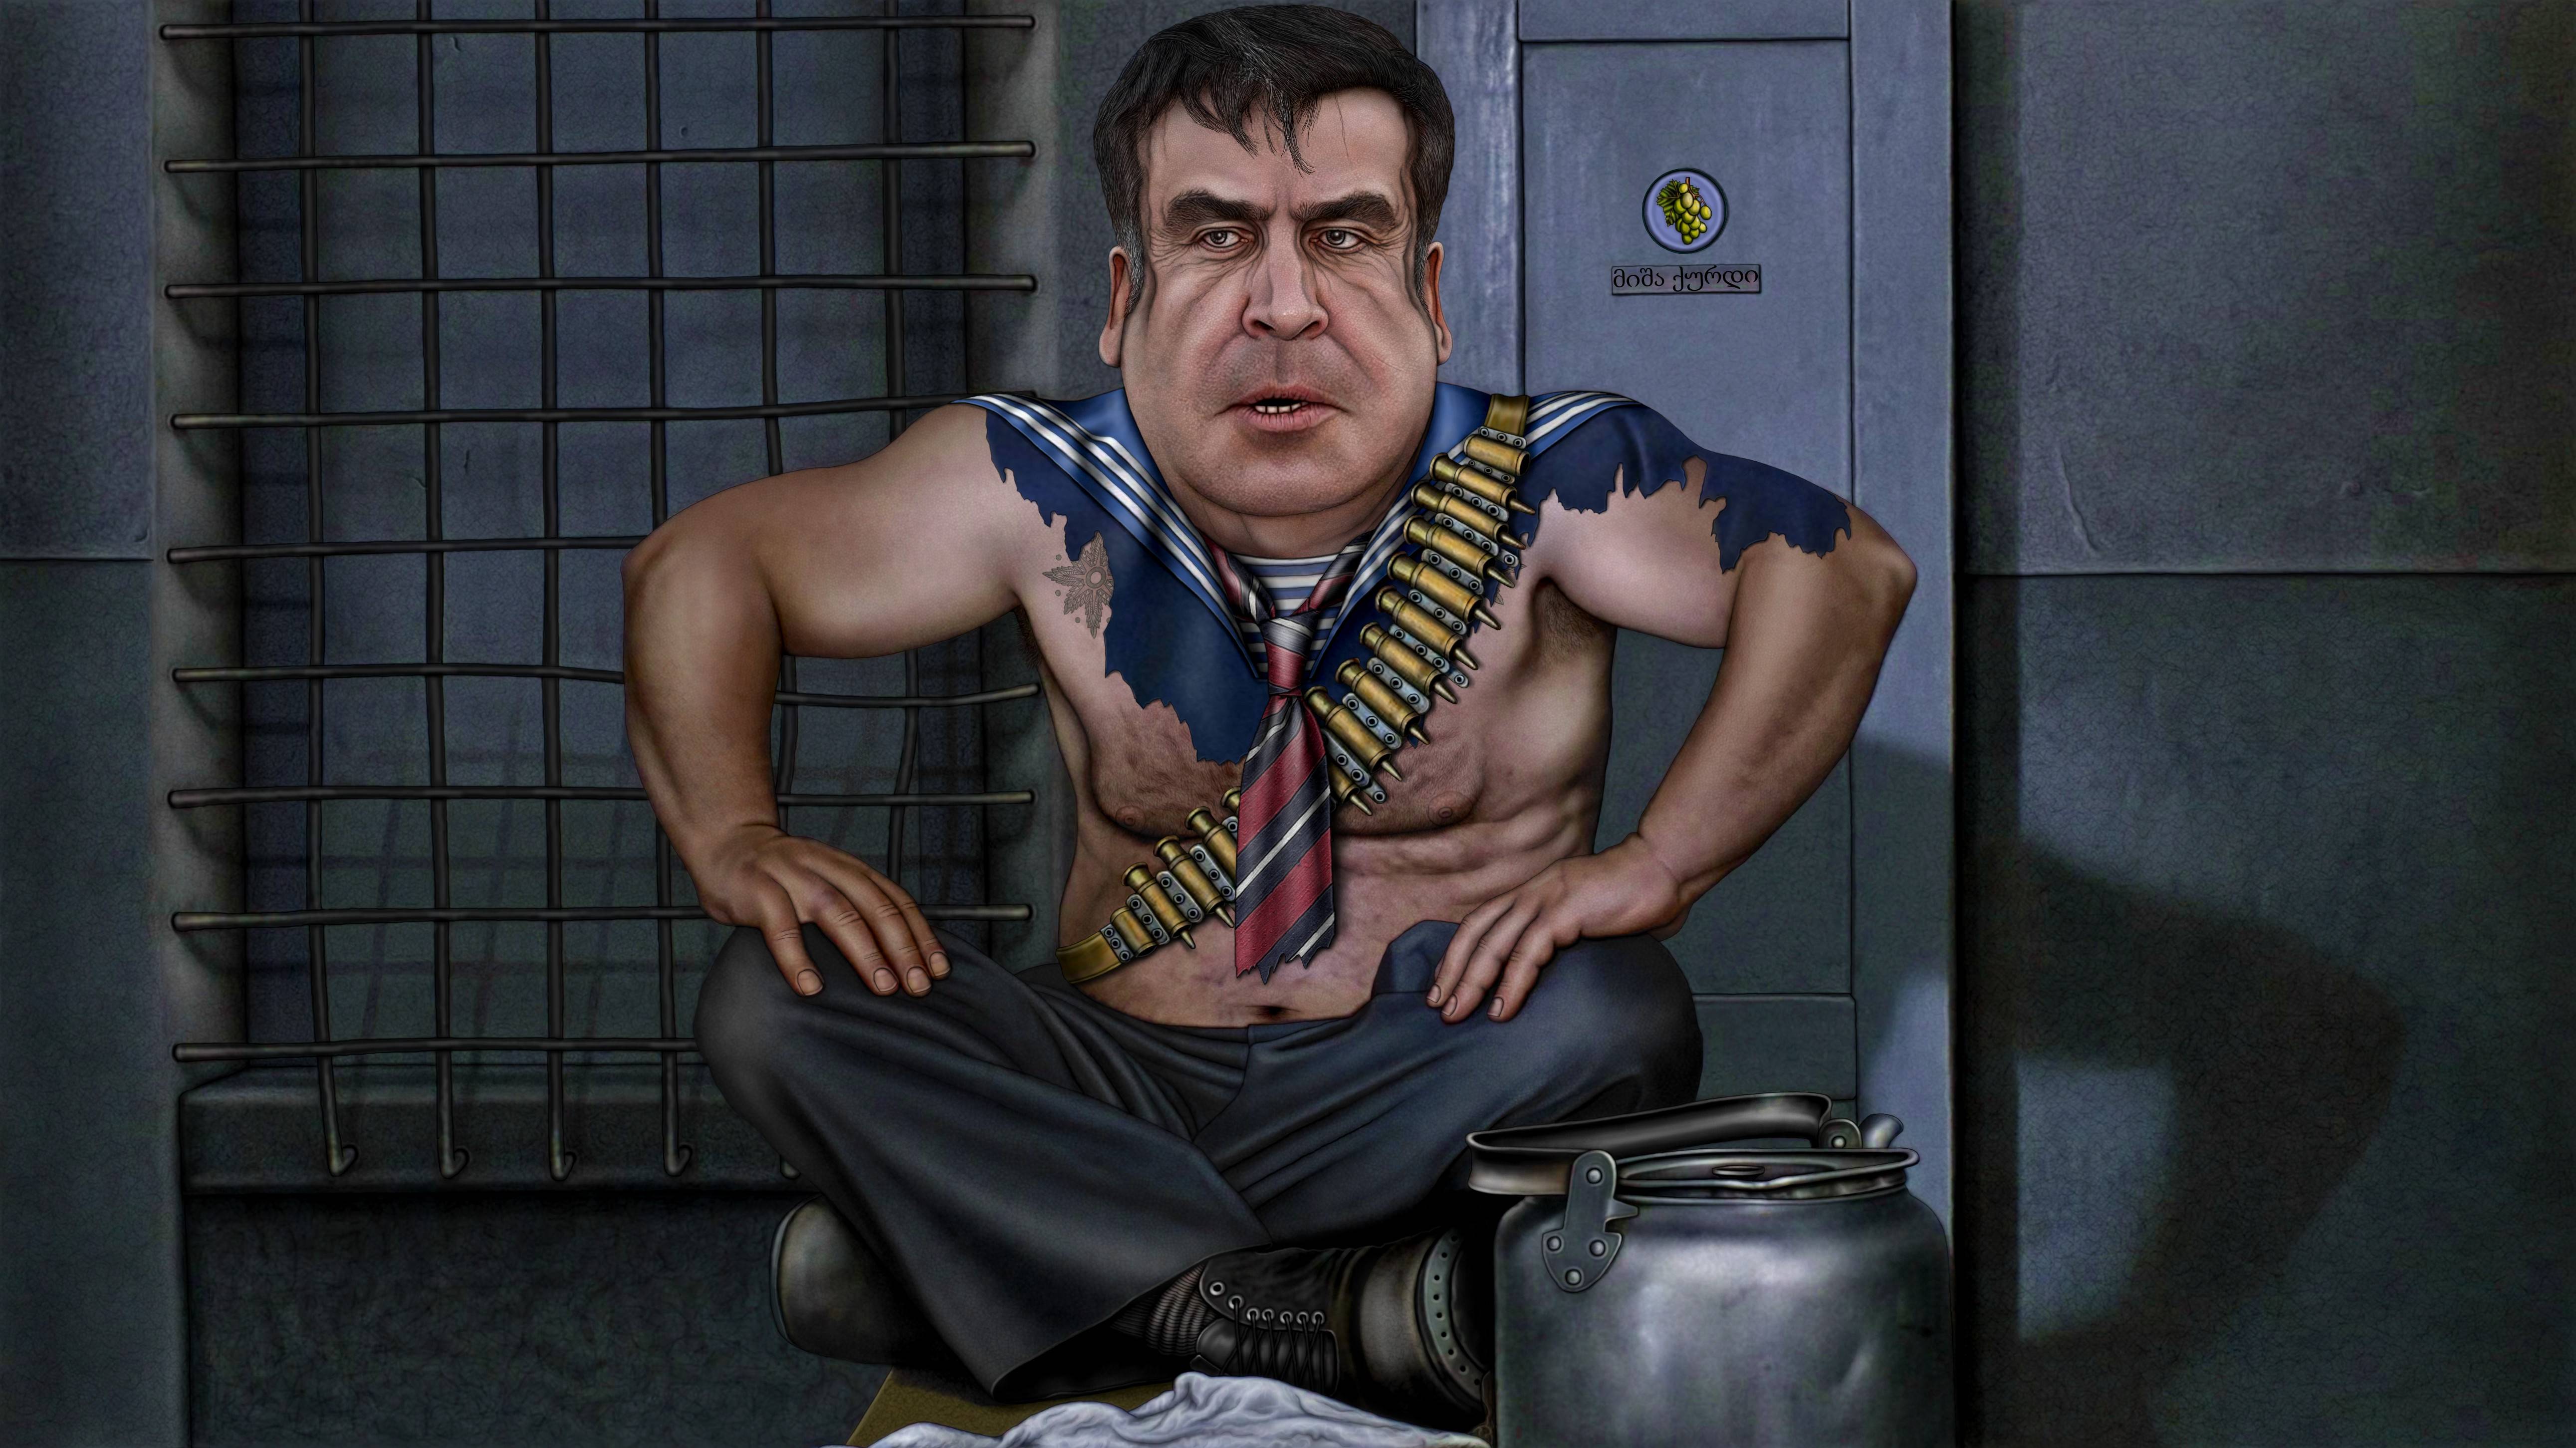 Wallpapers Saakashvili kettle prison on the desktop